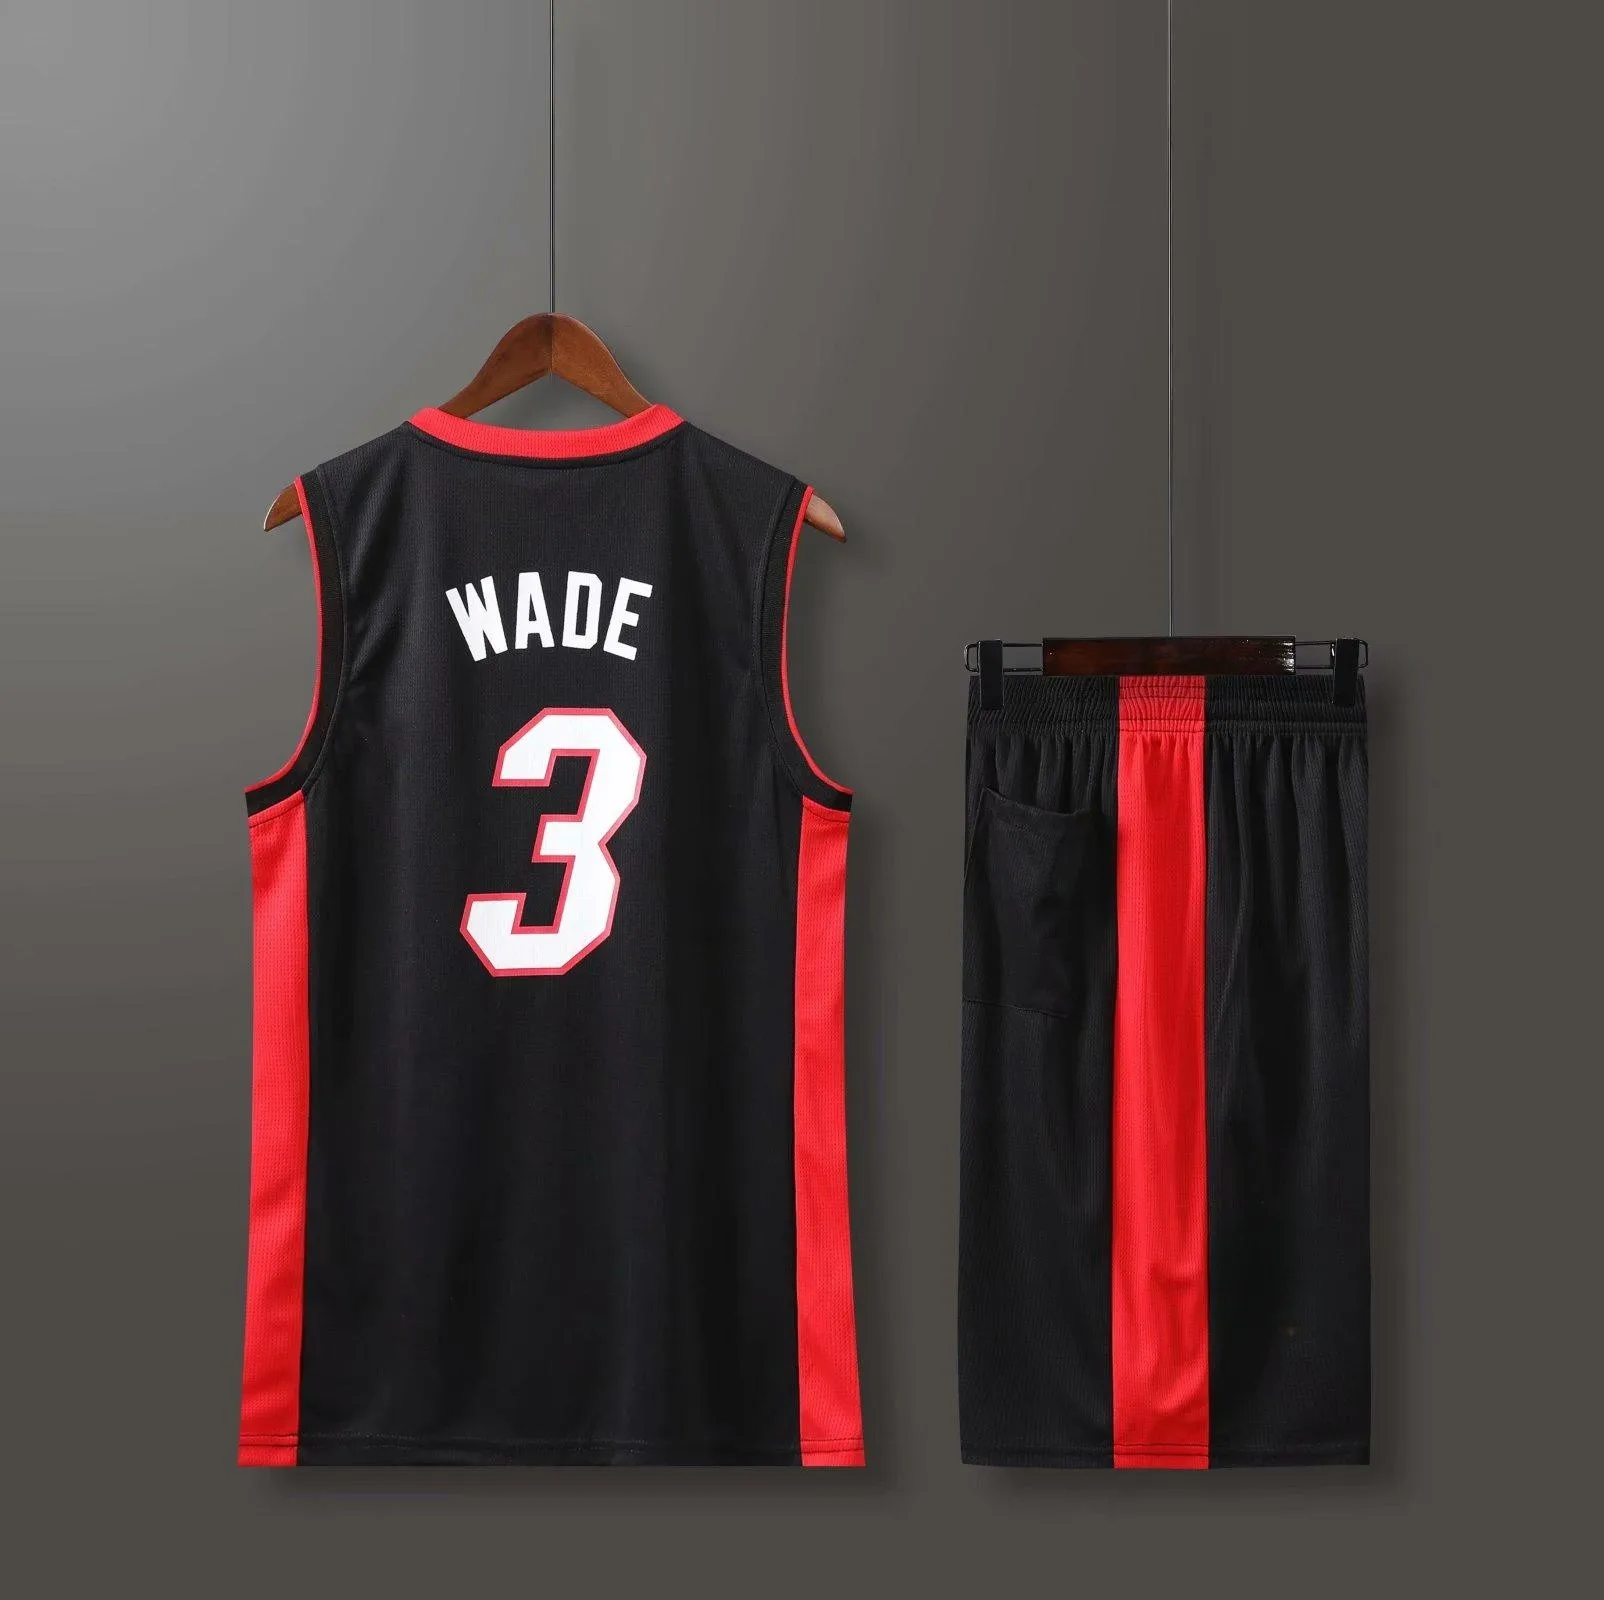 

High Quality USA Basketball Club Player Basketball Uniforms Star WADE 23 Has Team Logo Basketball Jerseys